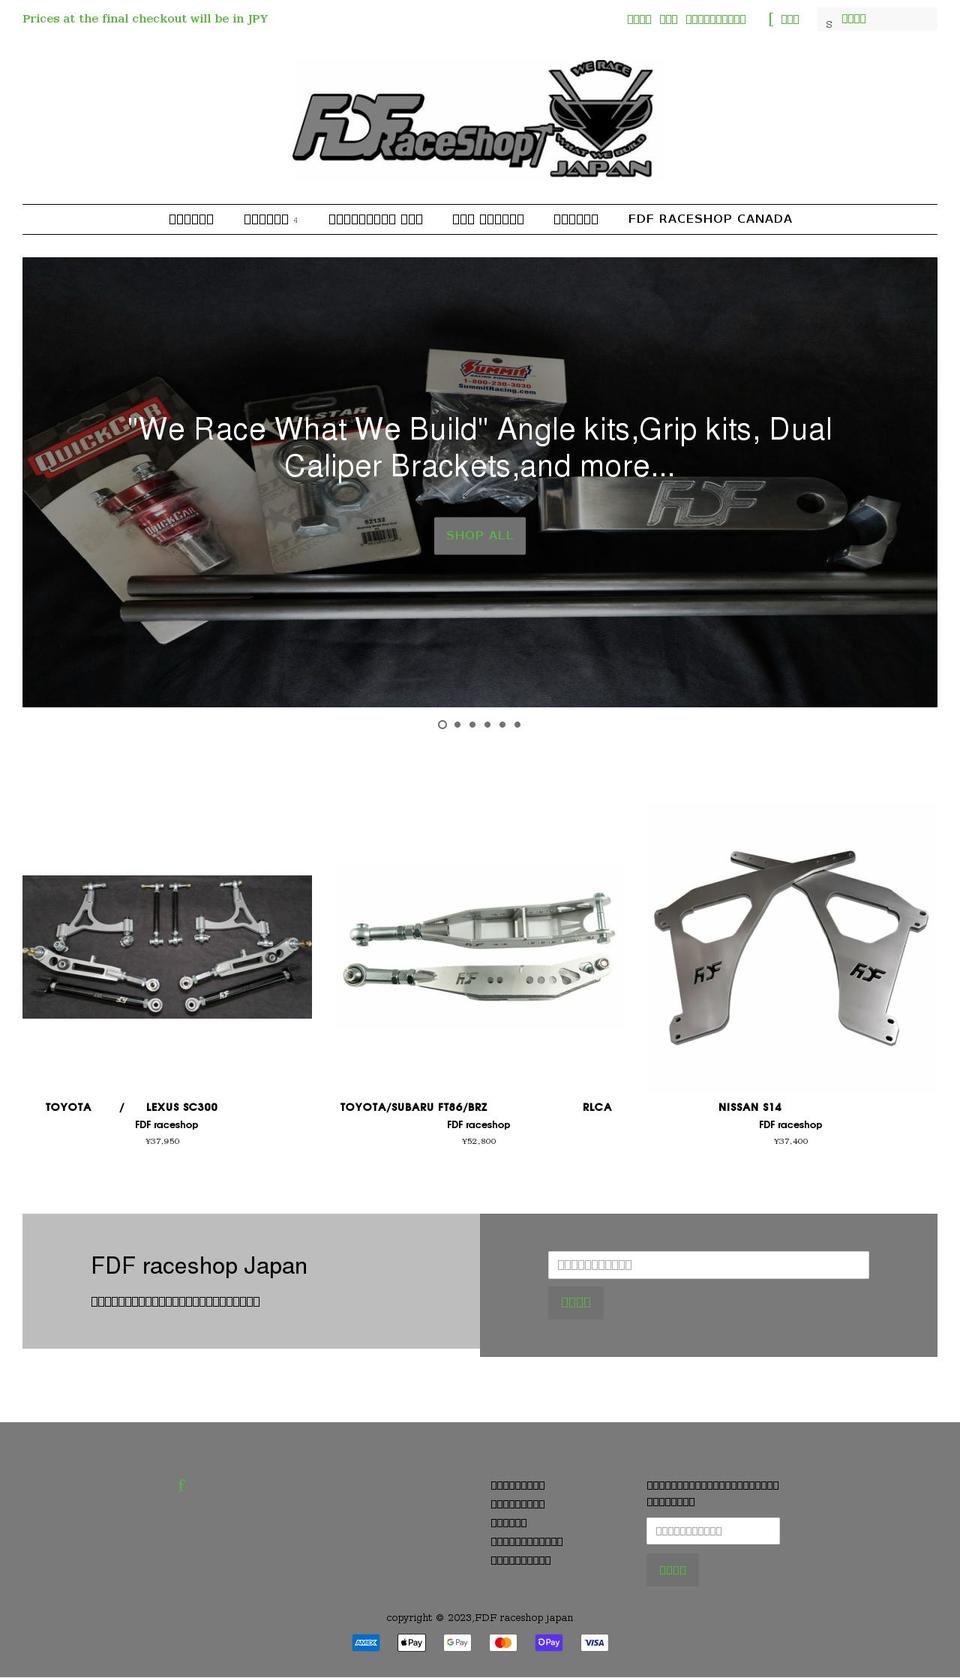 fdfraceshop.jp shopify website screenshot